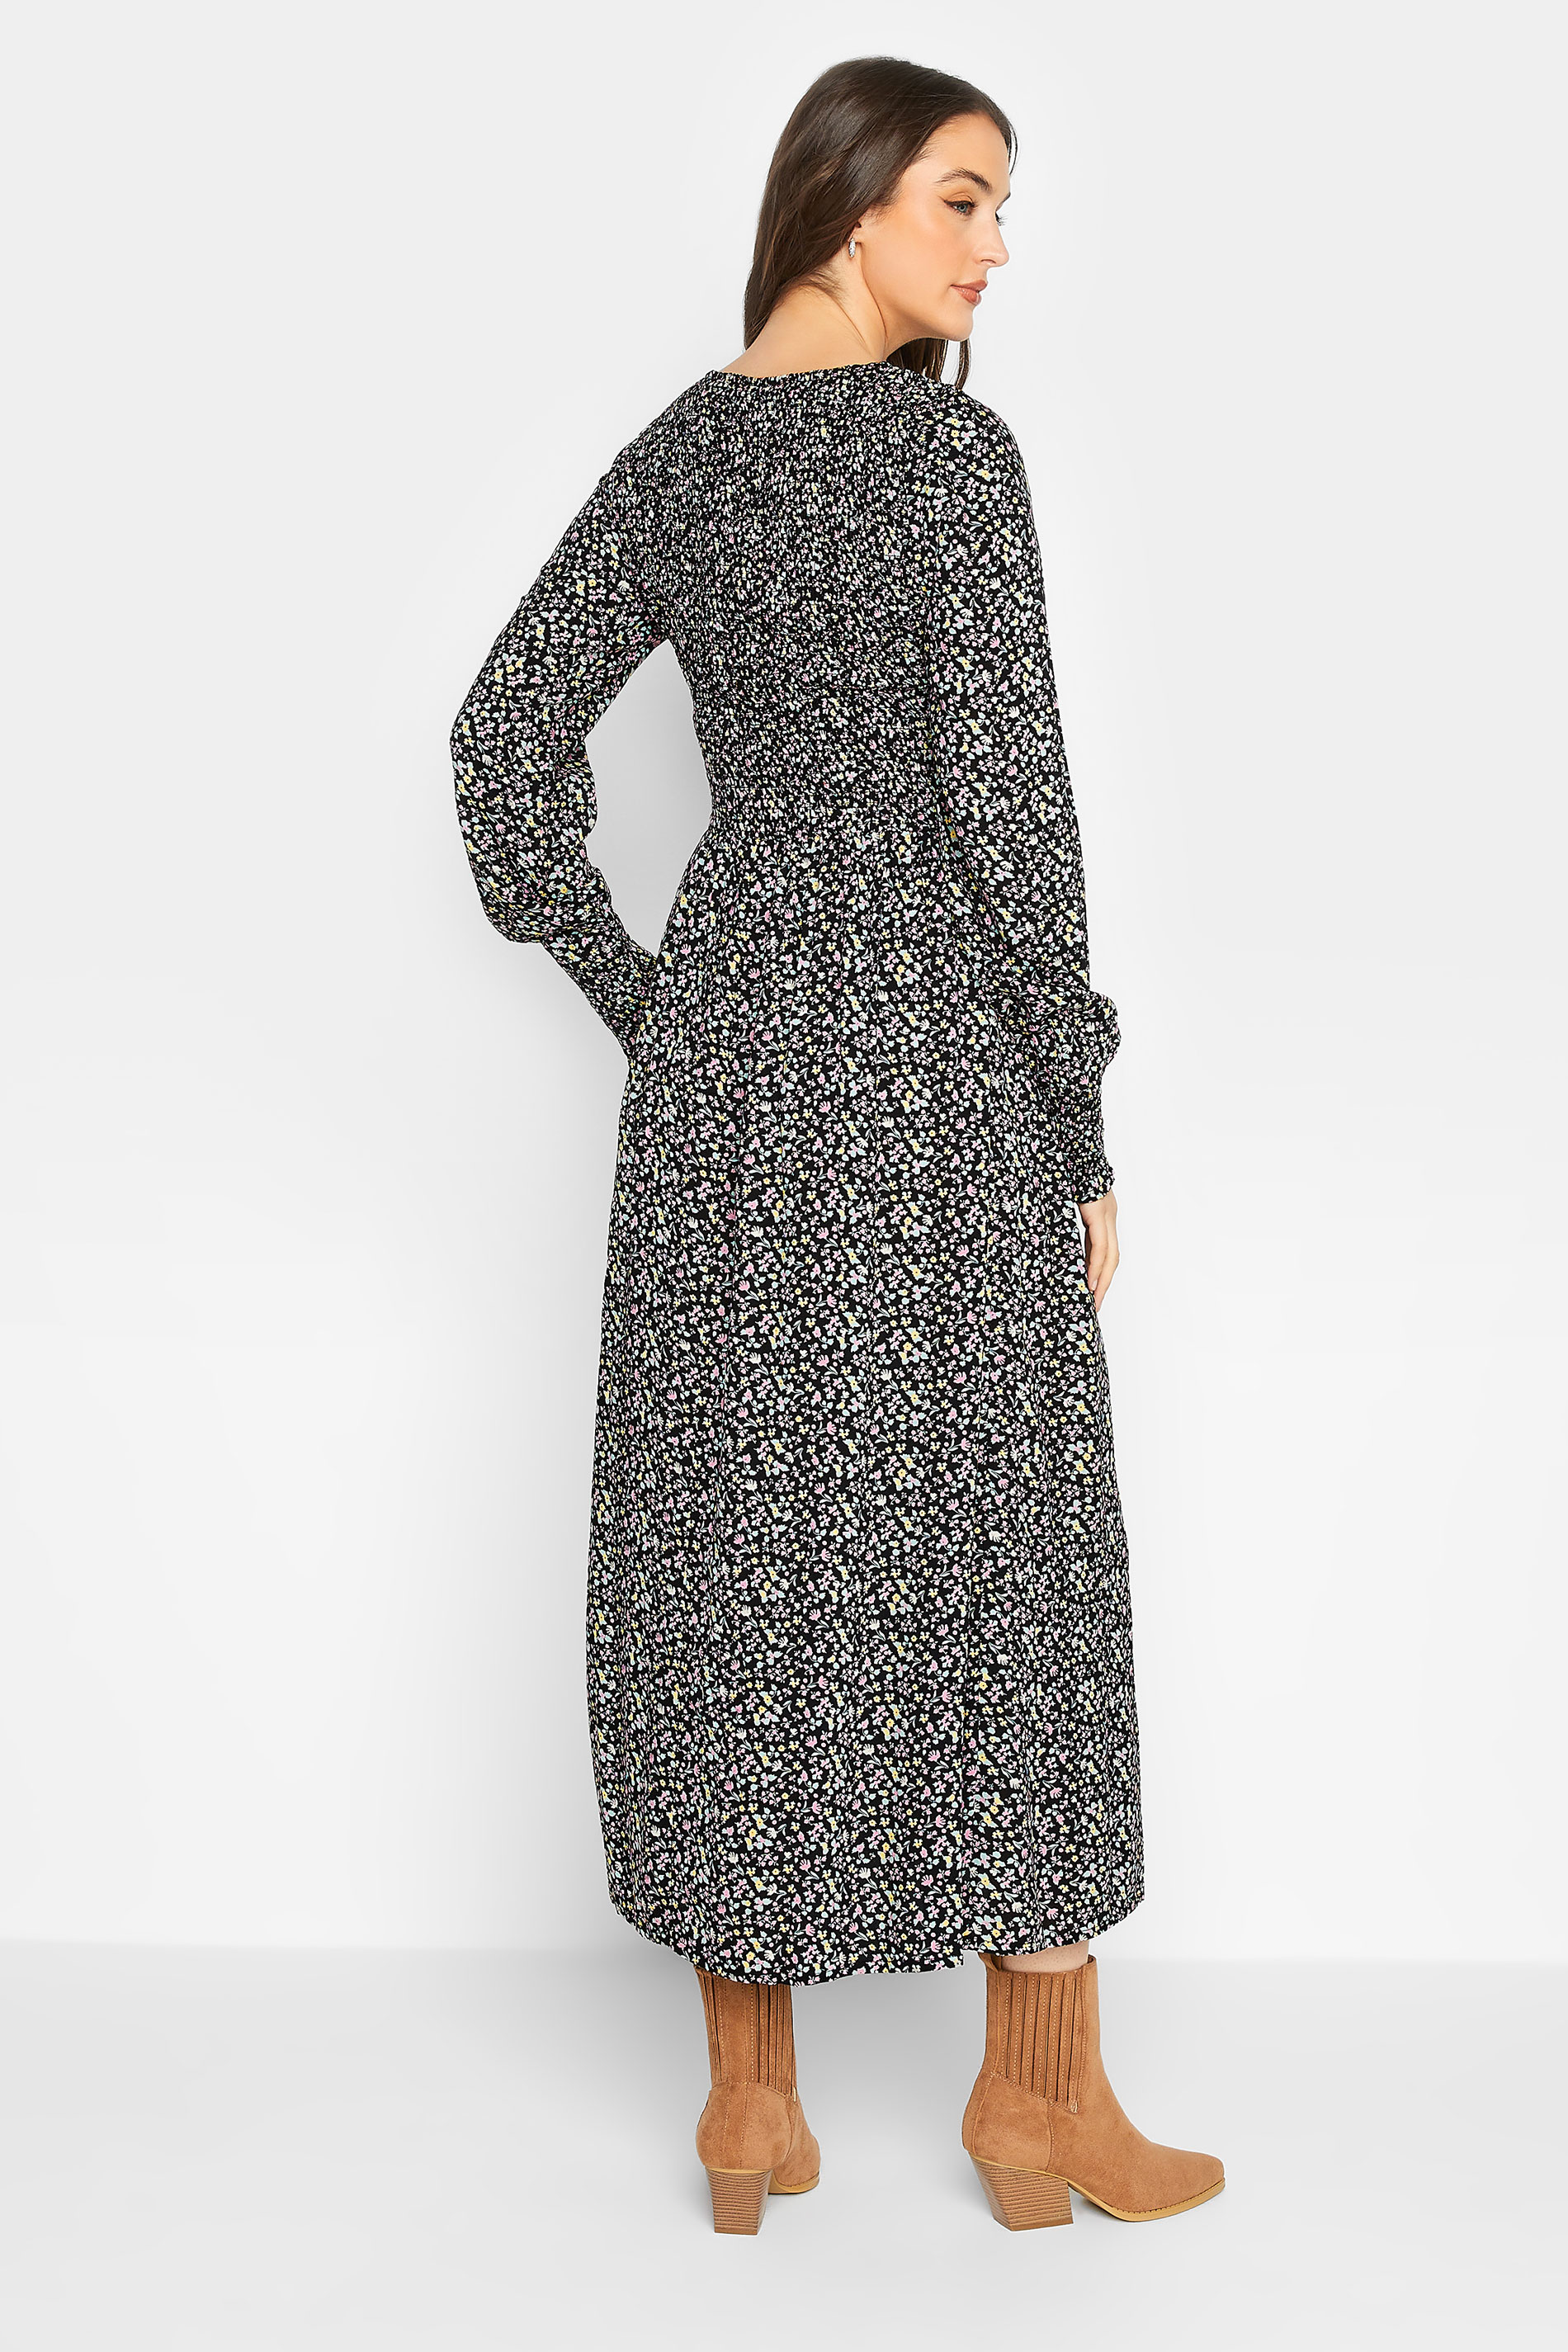 LTS Tall Women's Black Ditsy Shirred Midi Dress | Long Tall Sally  3